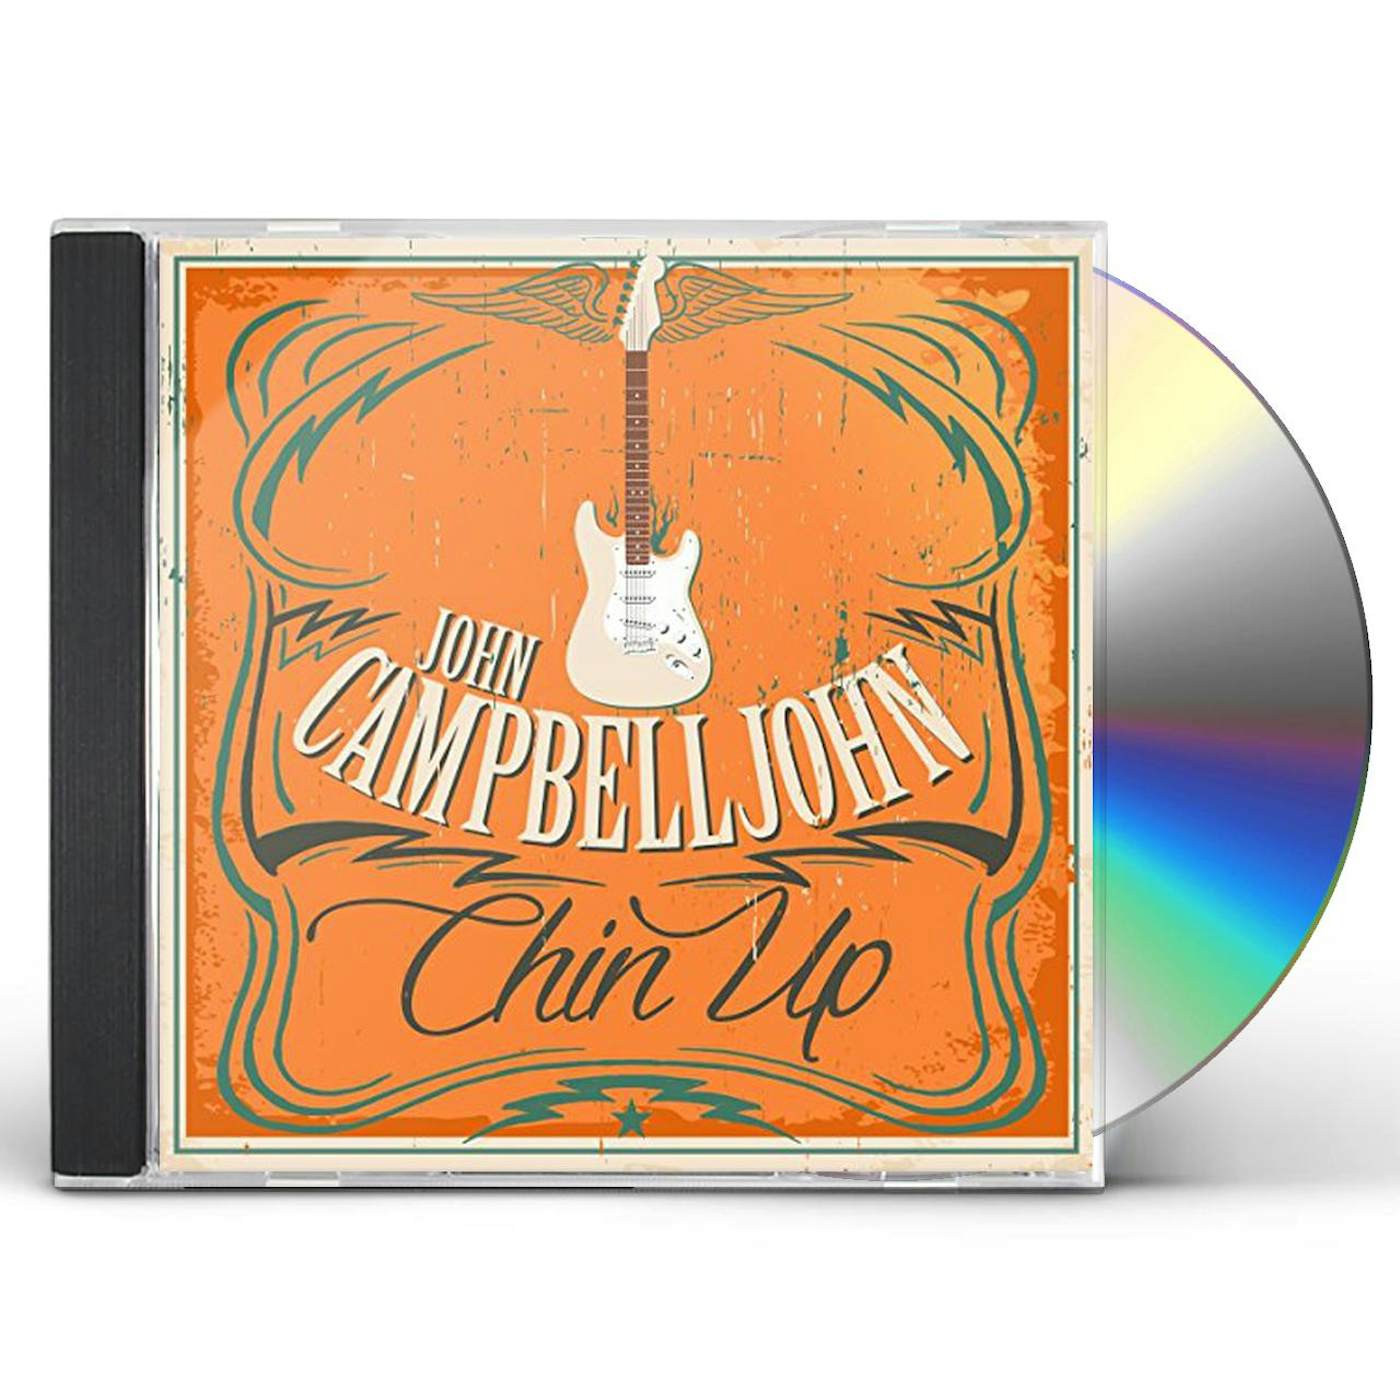 John Campbelljohn CHIN UP CD